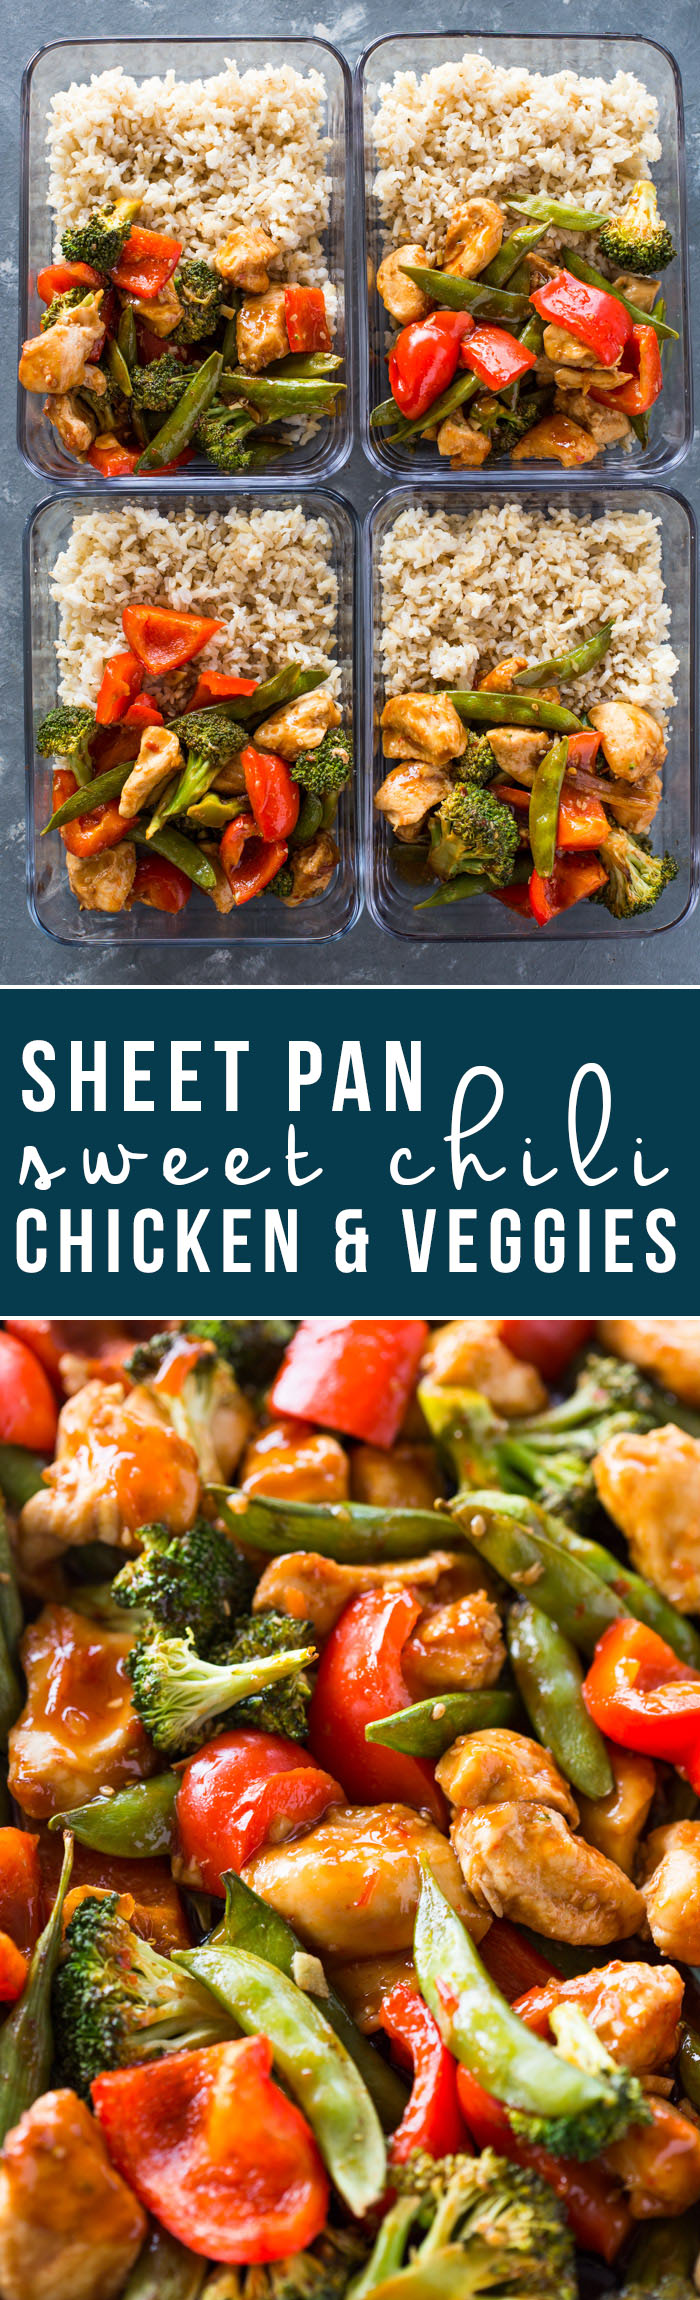 Sheet Pan Sweet Chili Chicken & Veggies